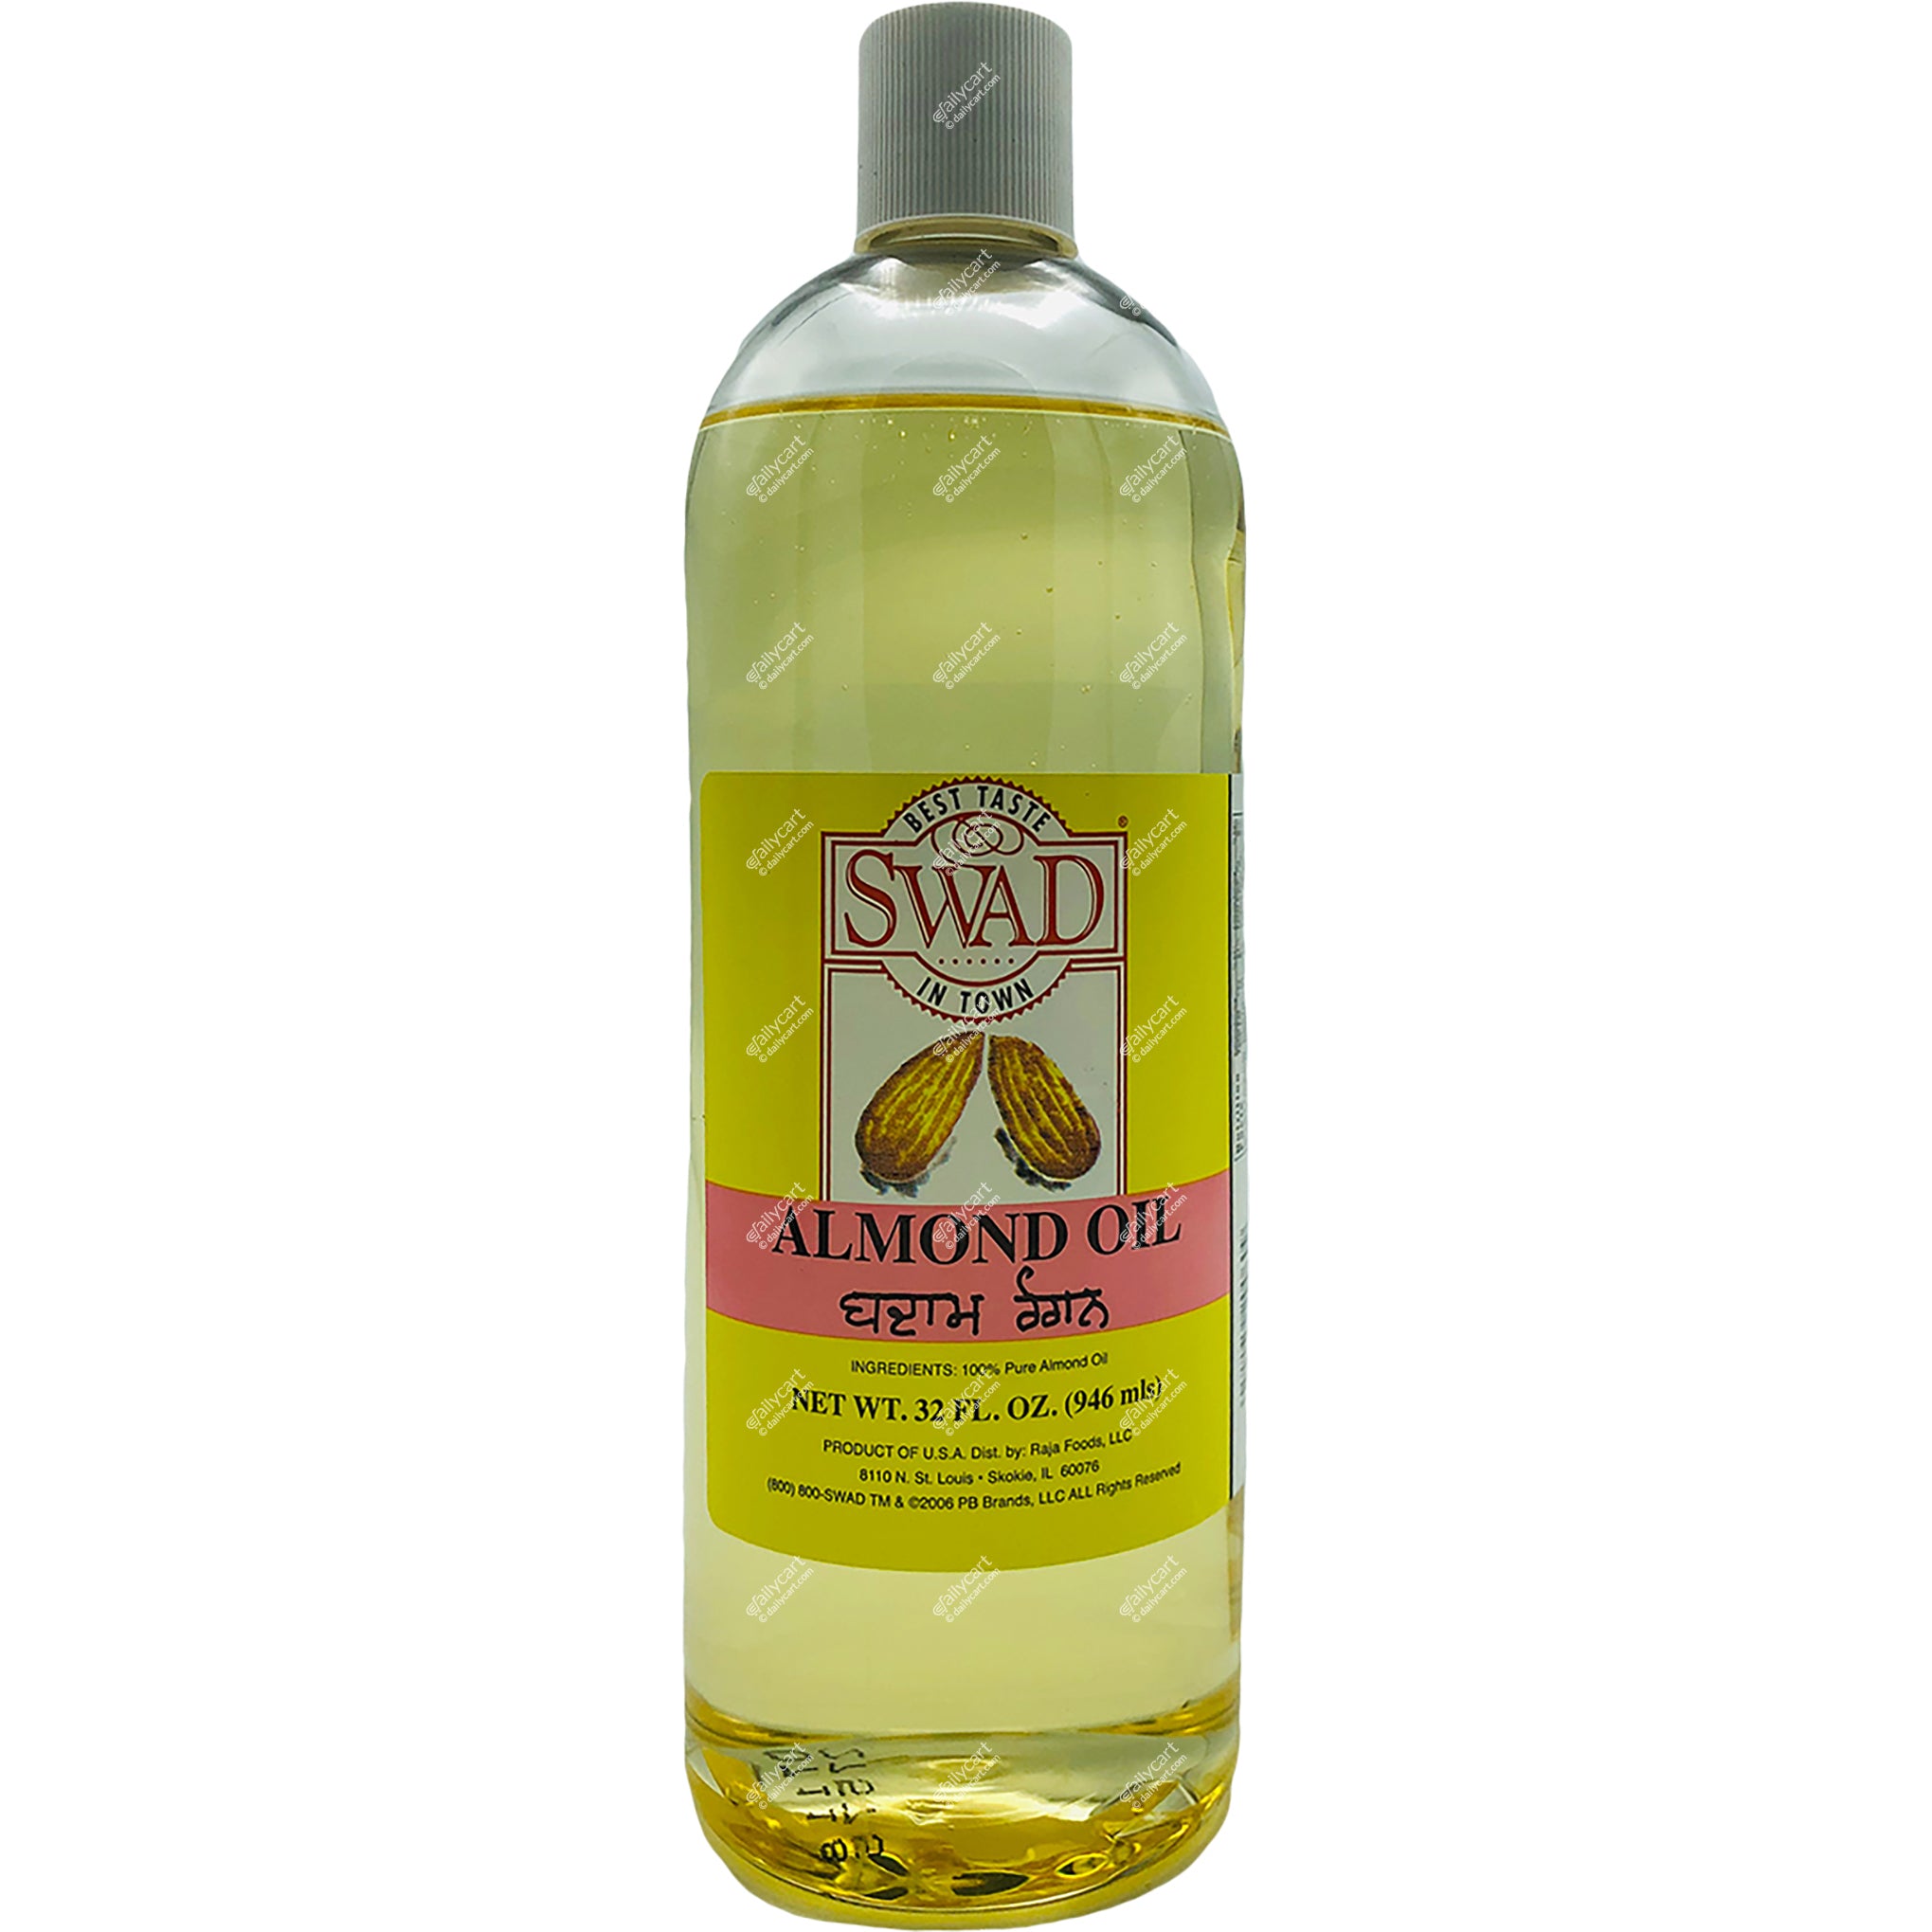 Swad Almond Oil, 1 lb